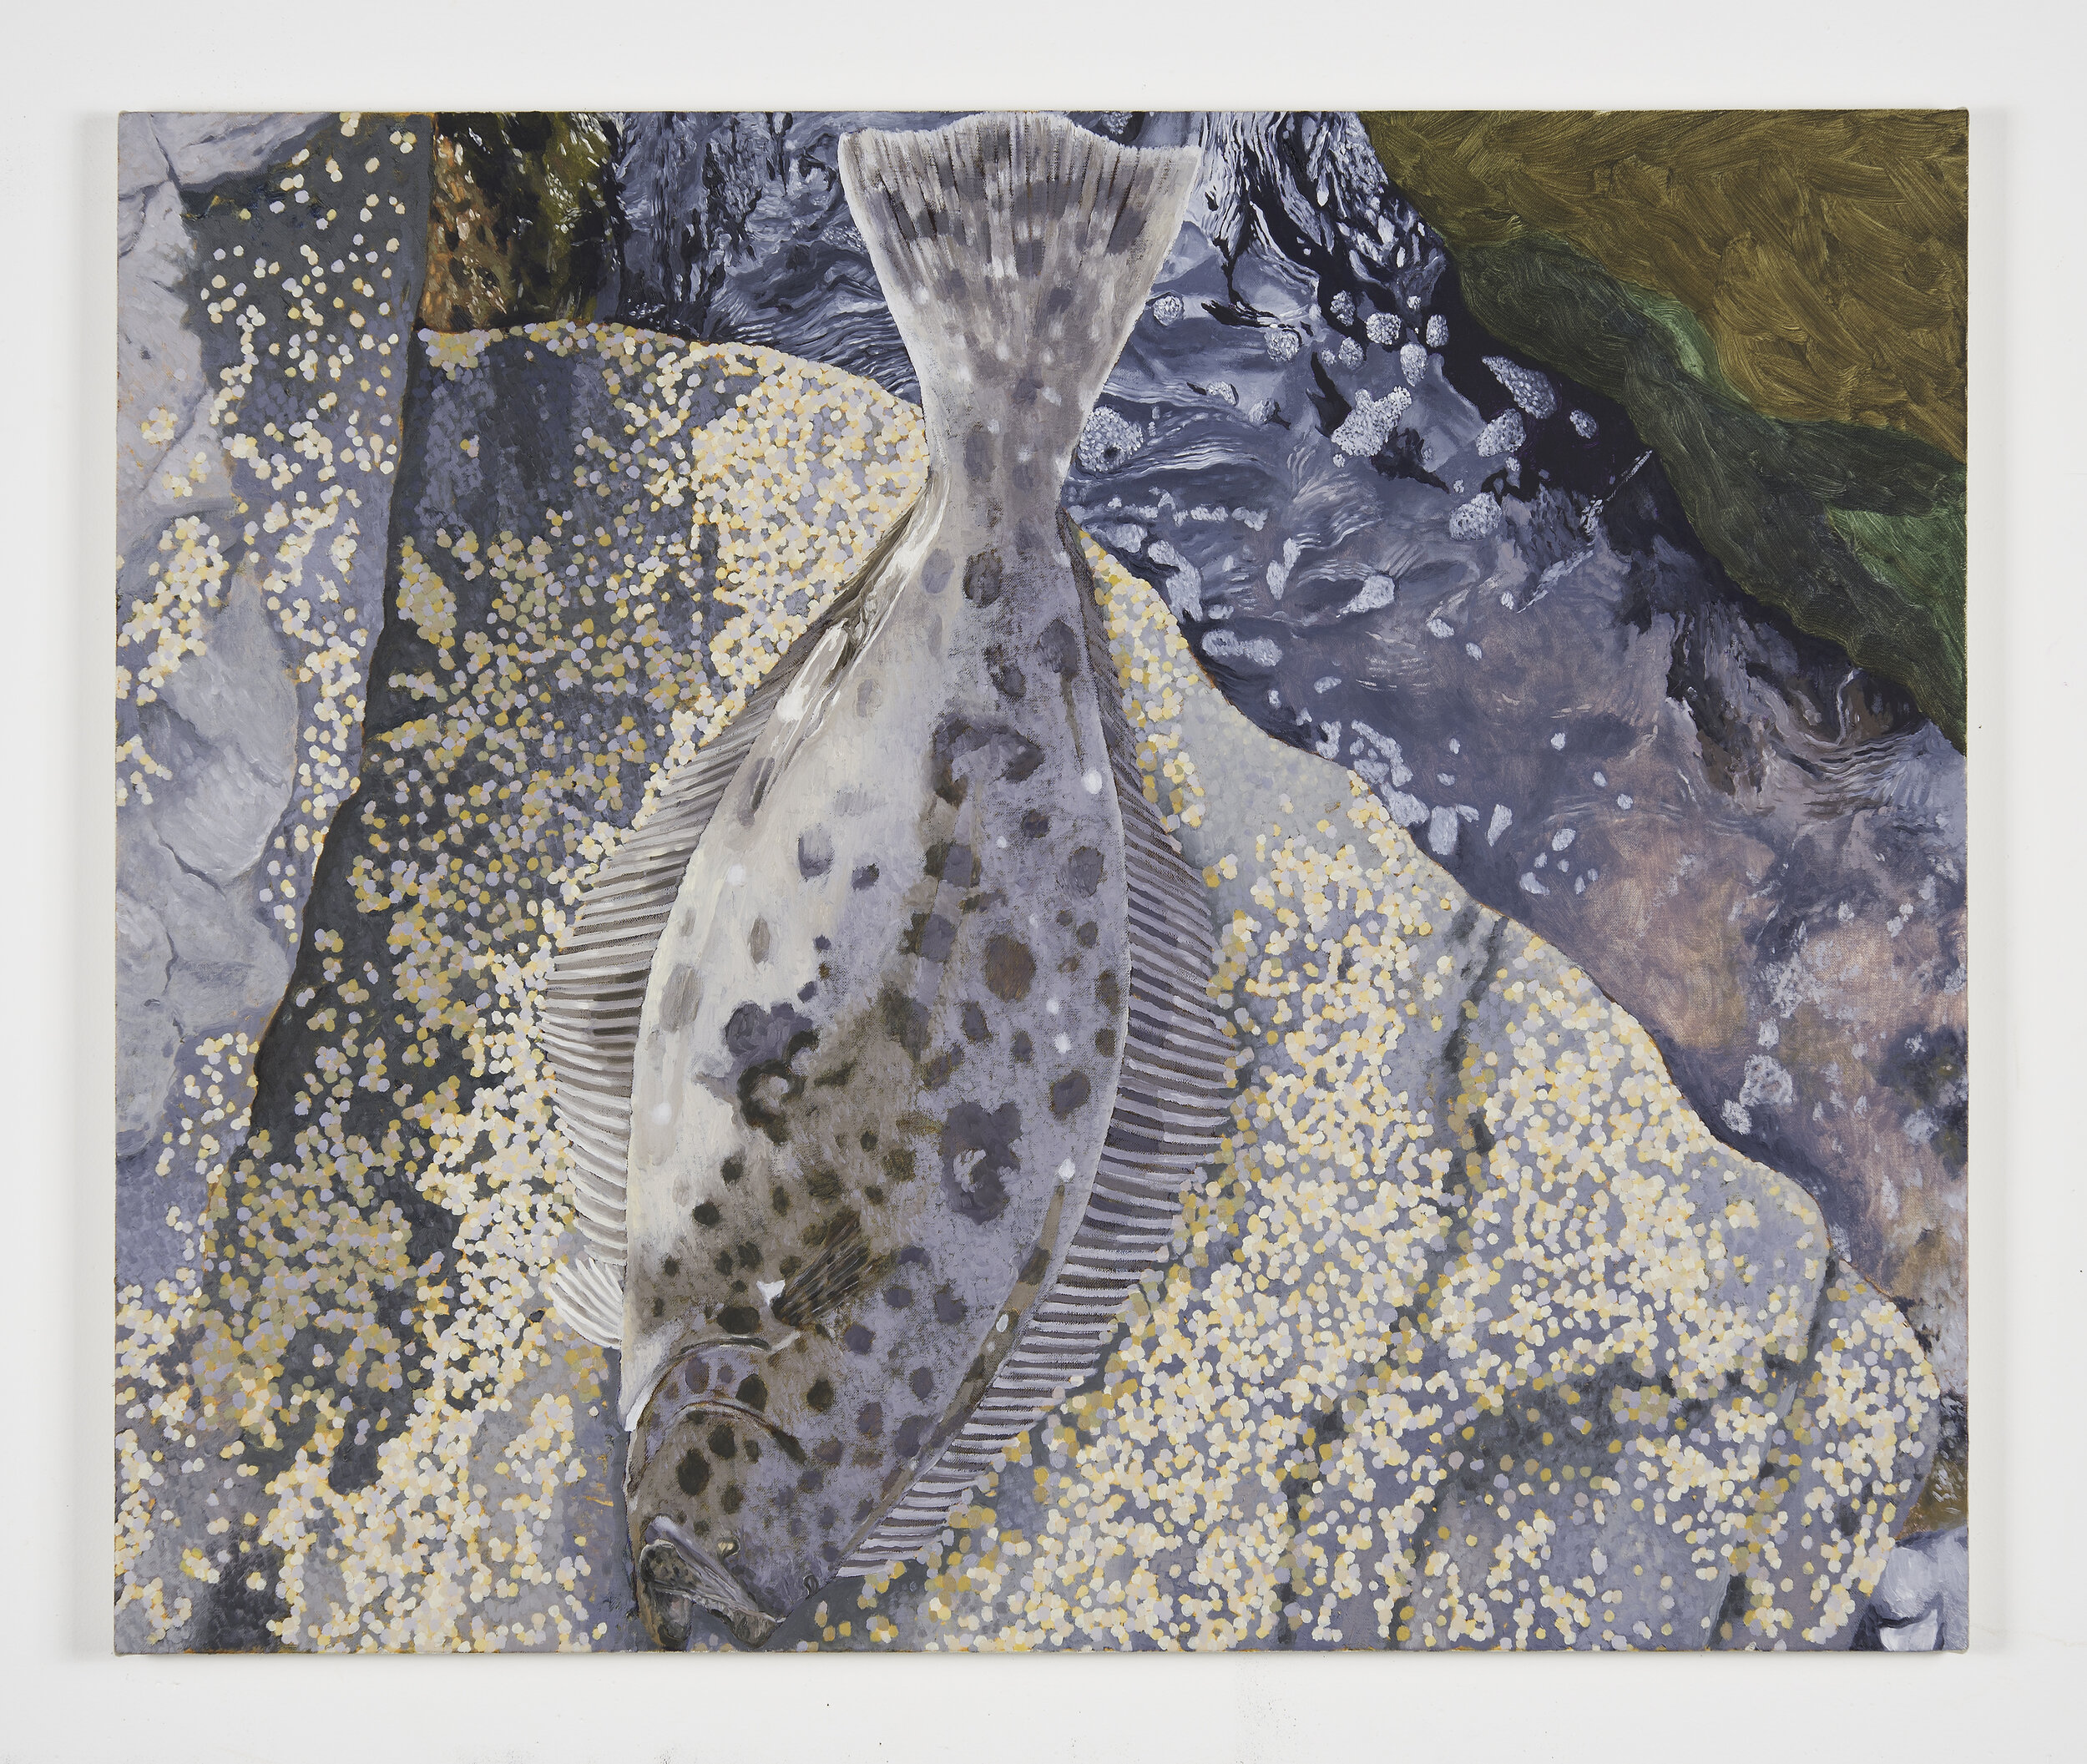   Adam Higgins   California Halibut on the rocks  2019 Oil on canvas 30 x 36 inches 